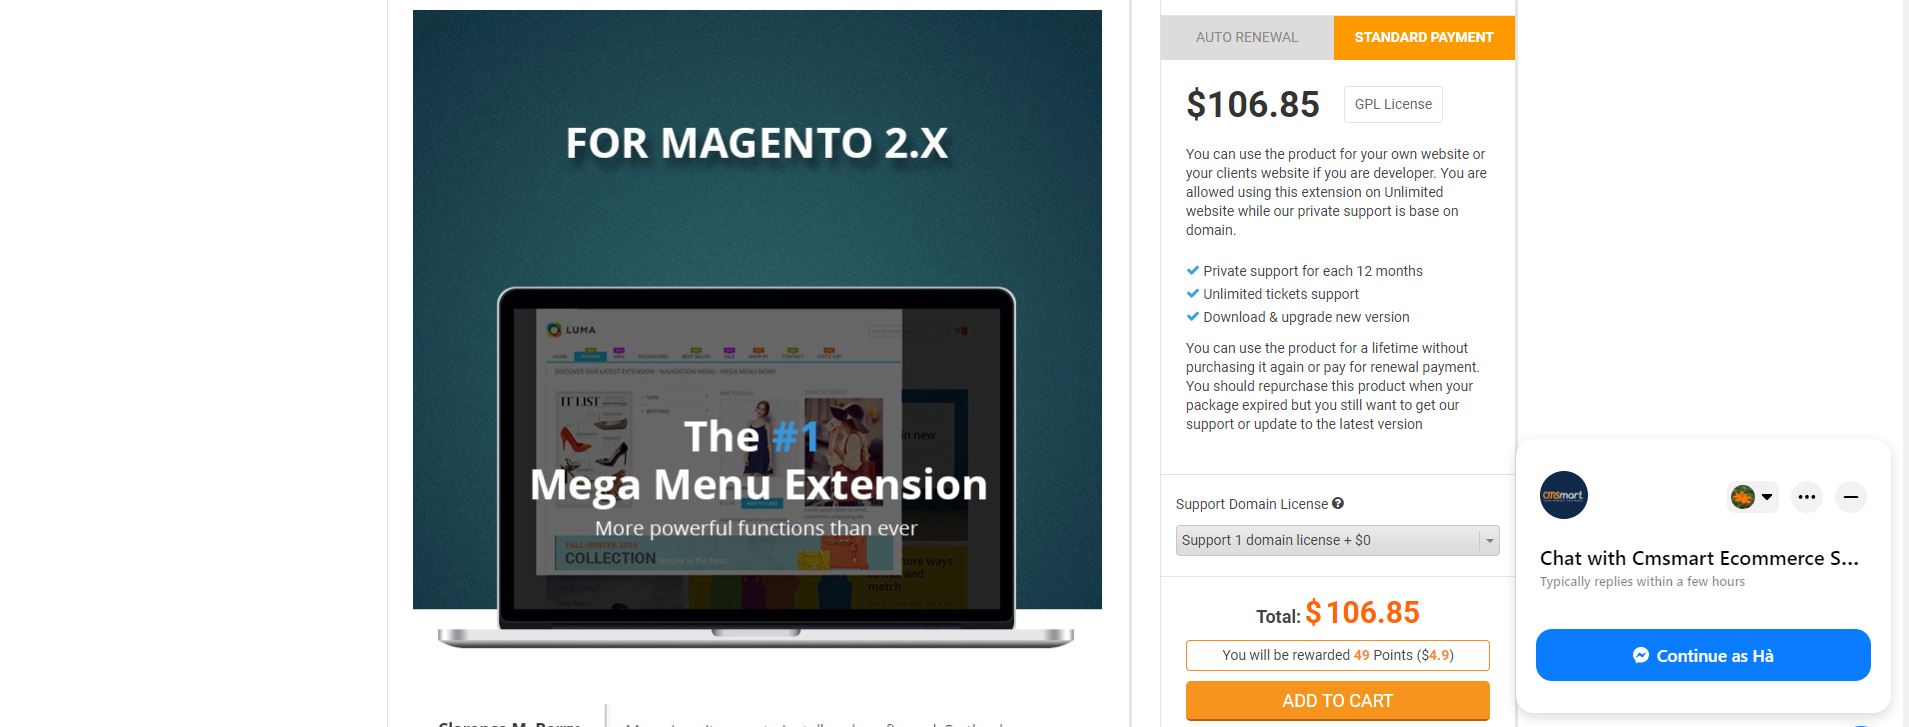 Magento mega menu extension